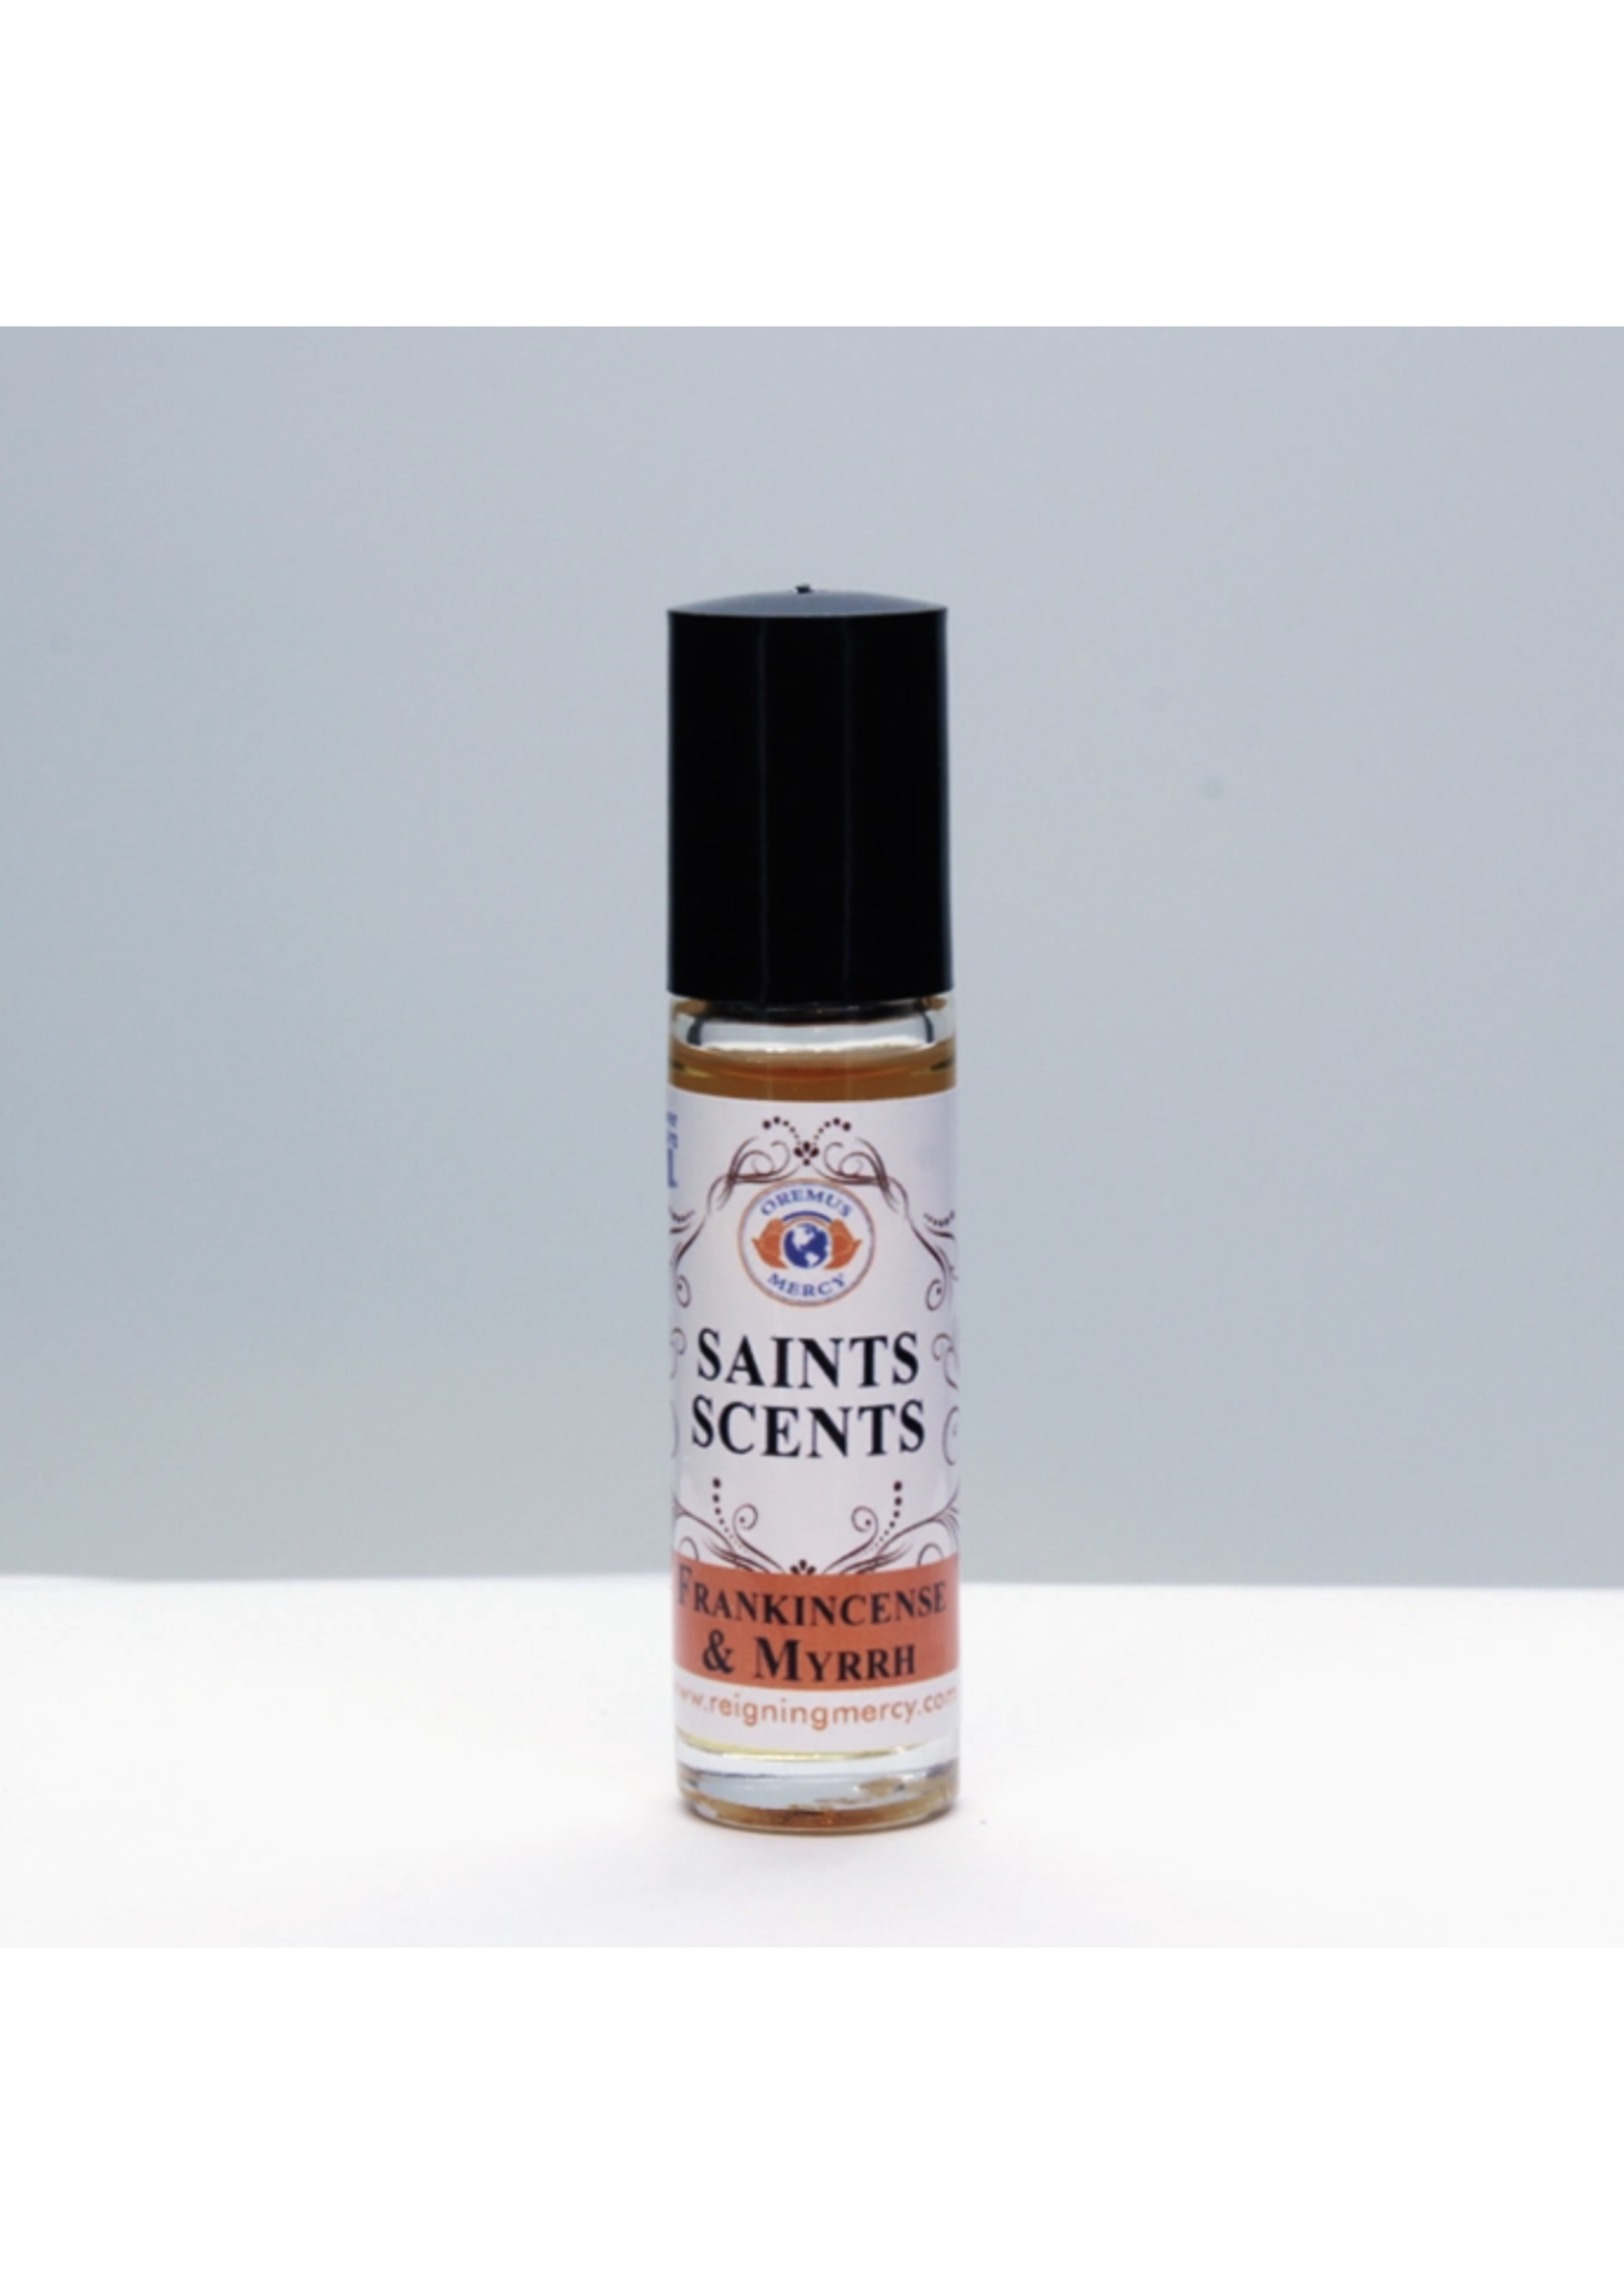 Frankincense & Myrrh – Scented Oil